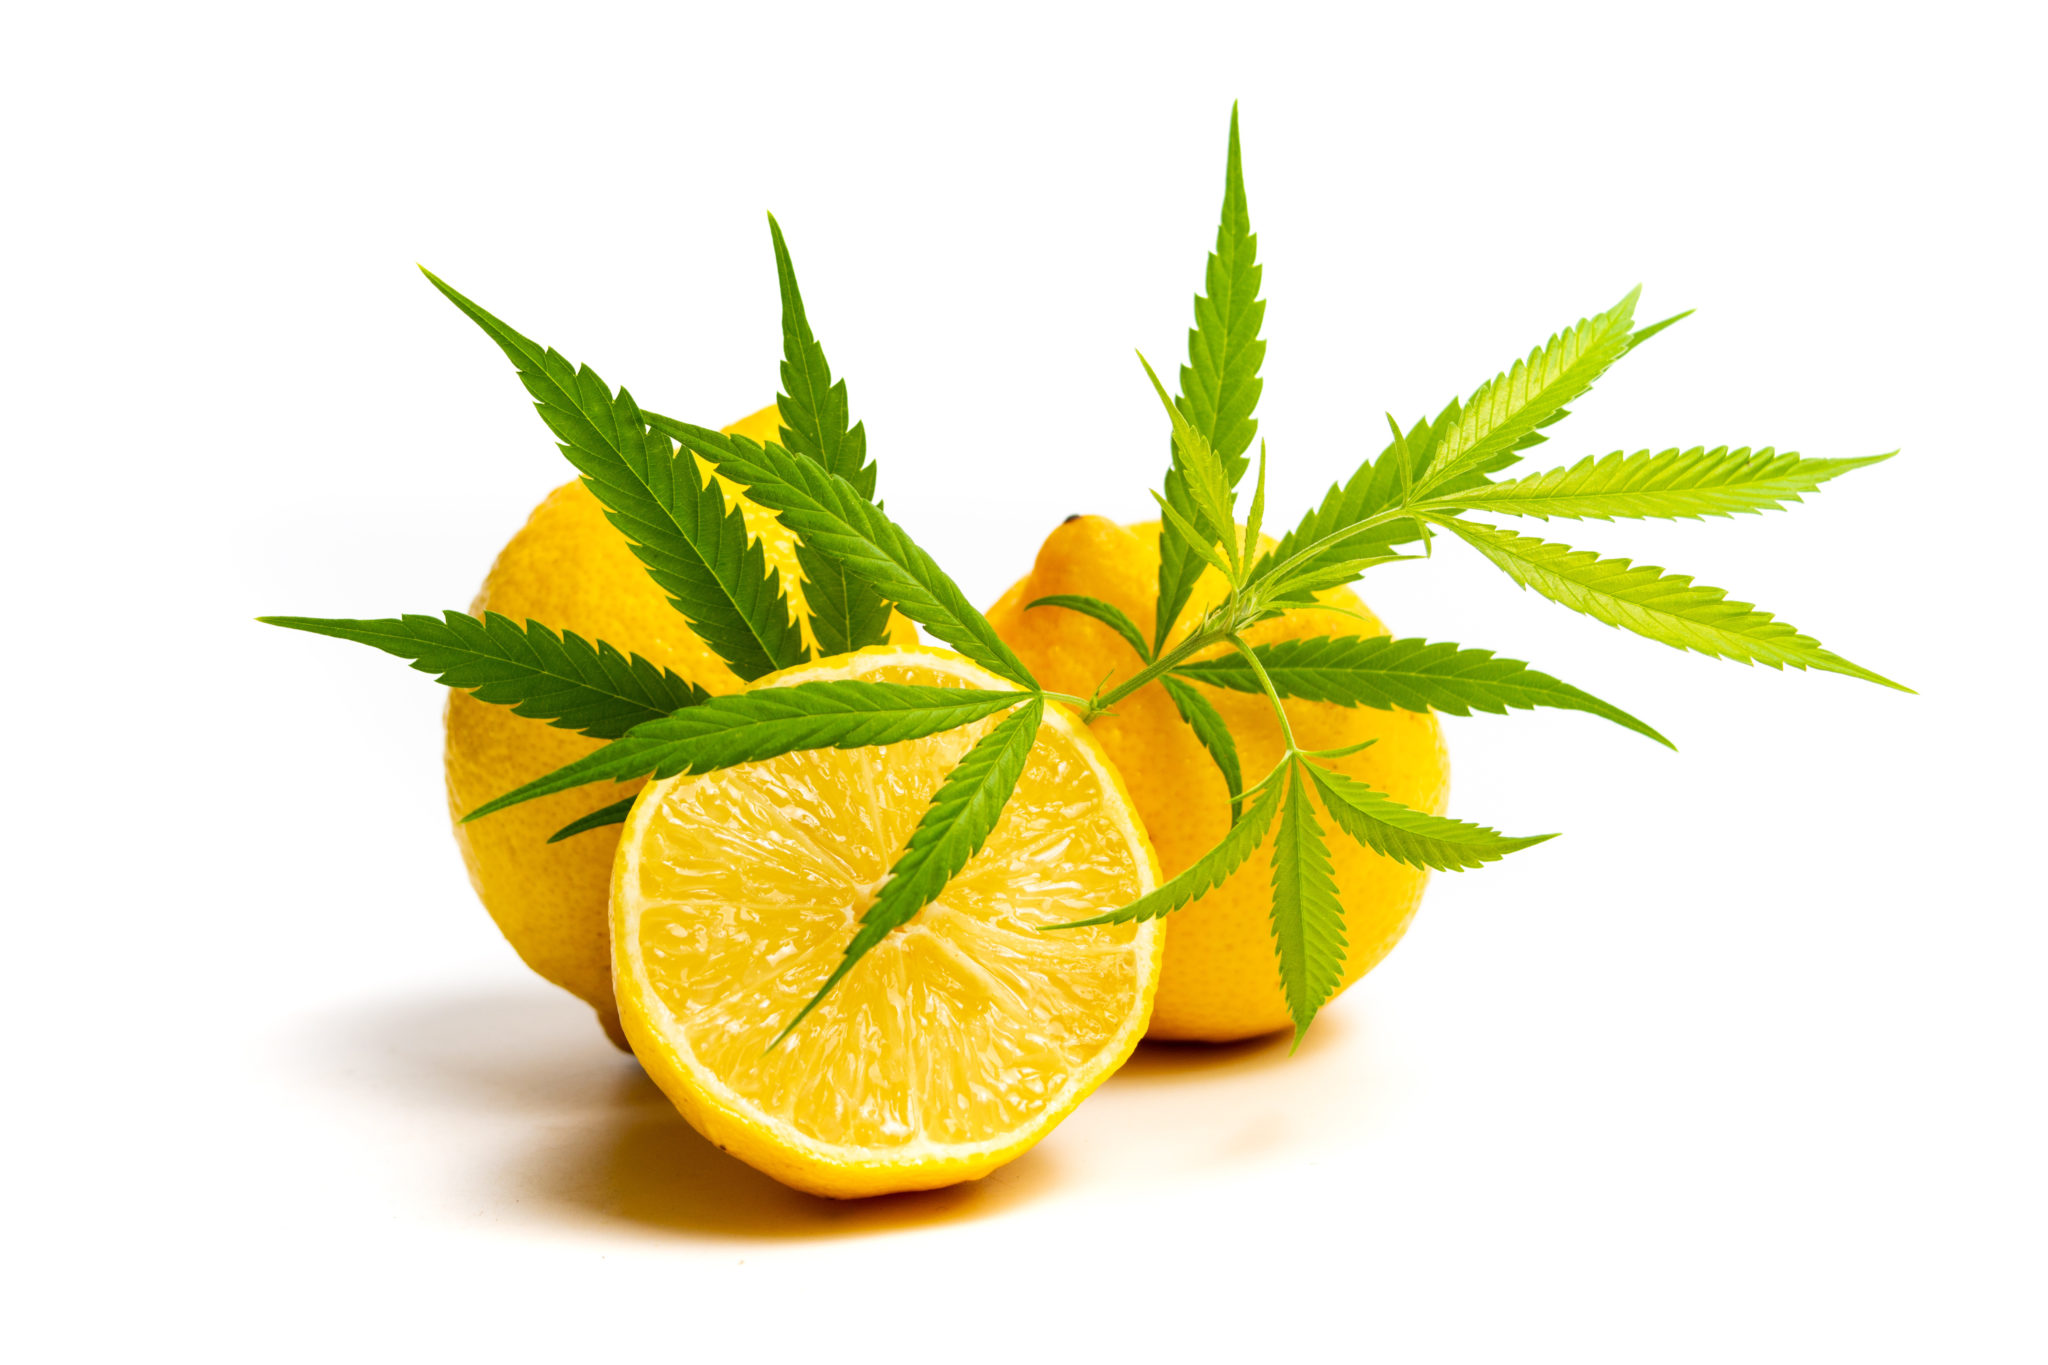 Marijuana leaf and lemon isolated